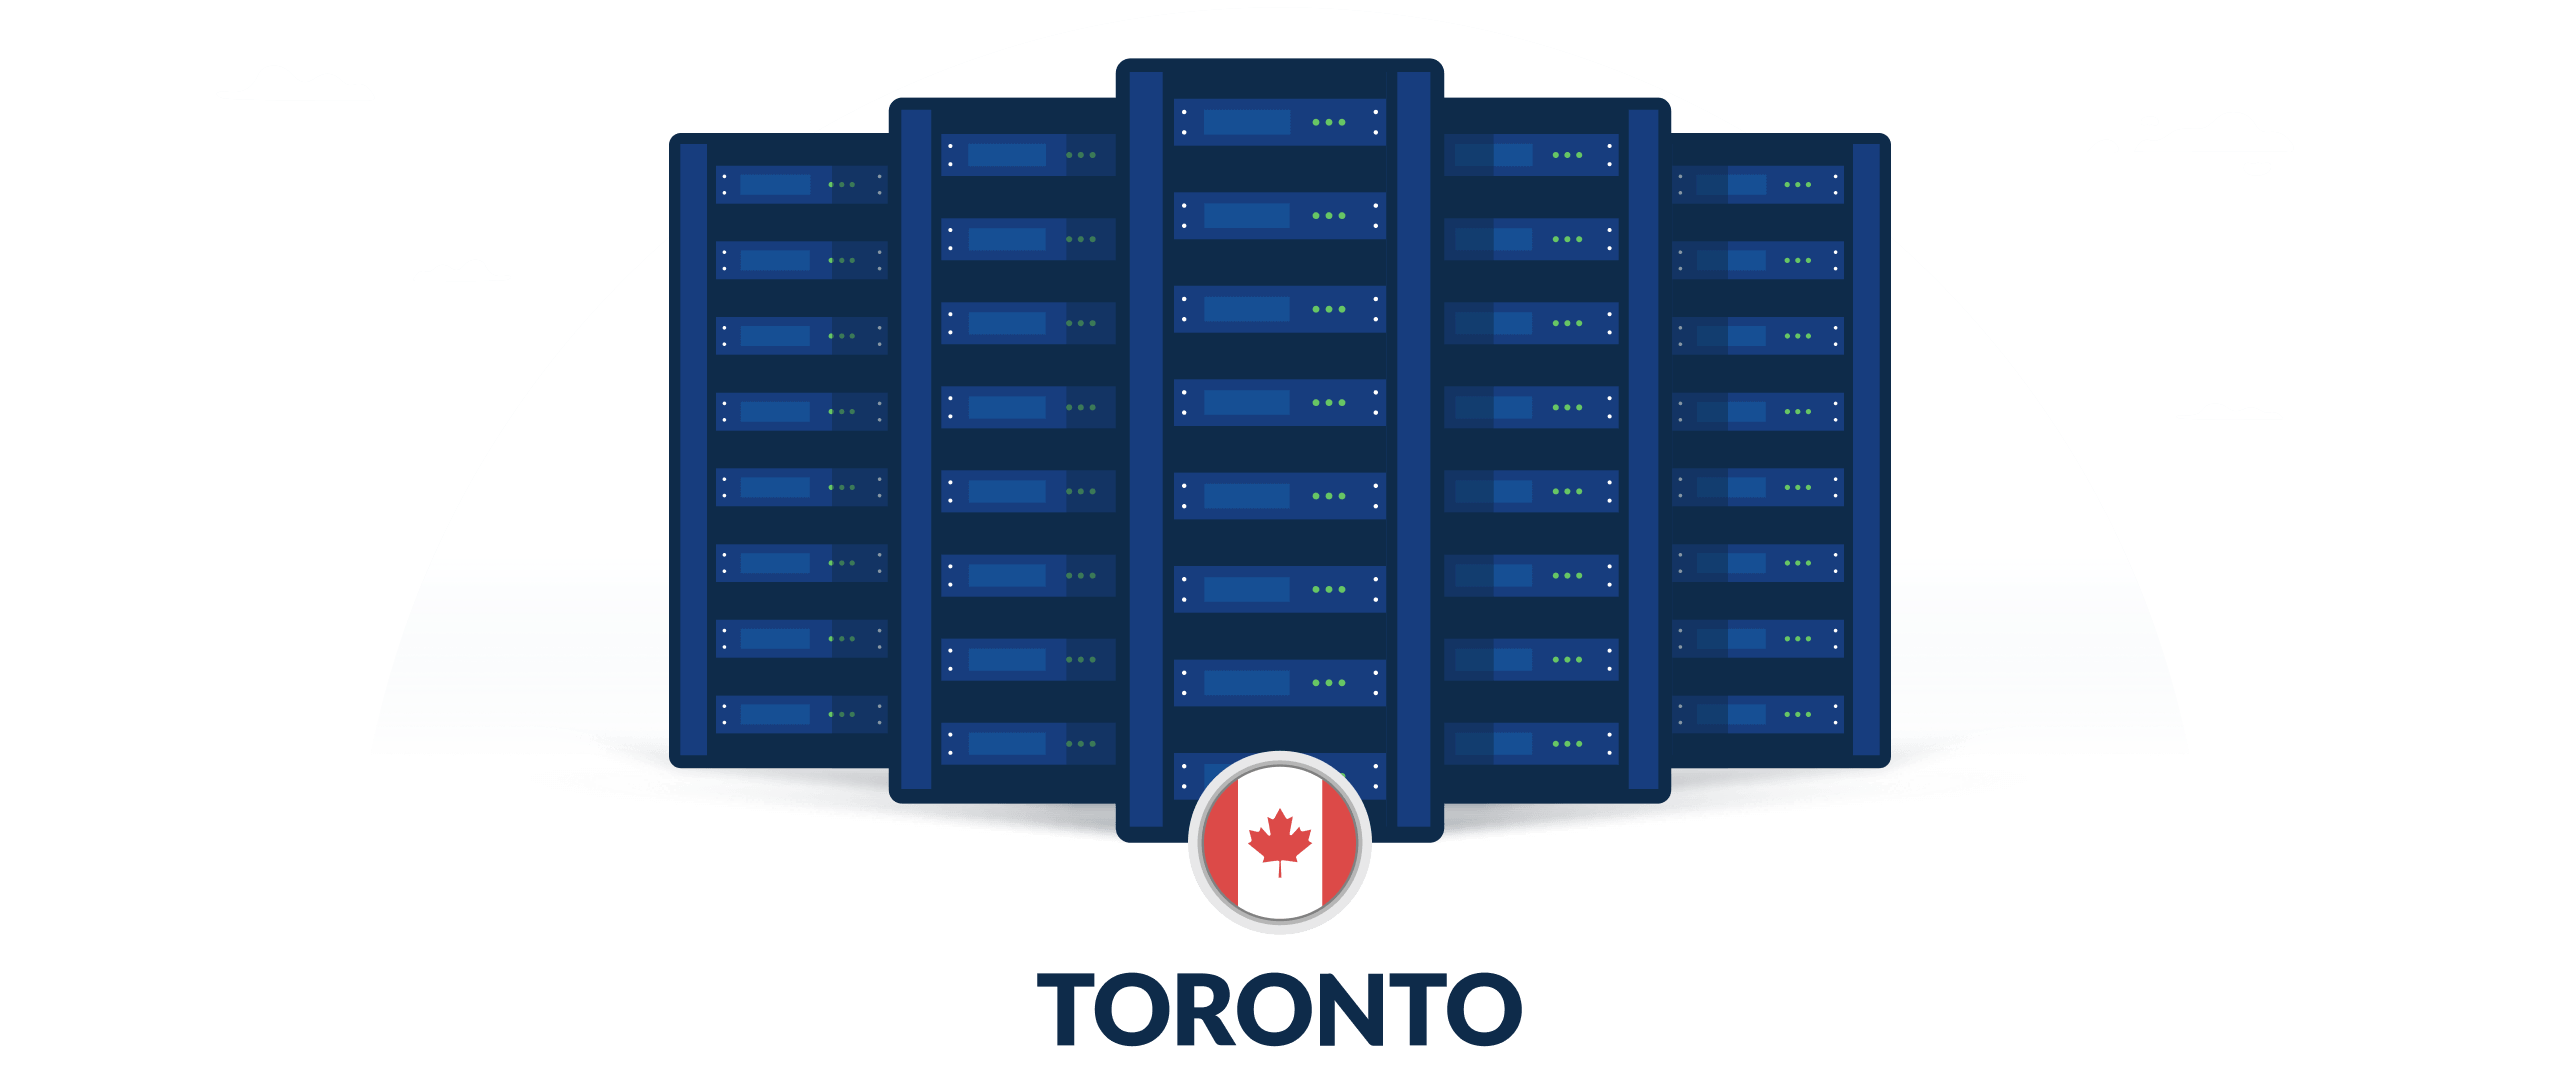 VPN servers in Toronto, Canada